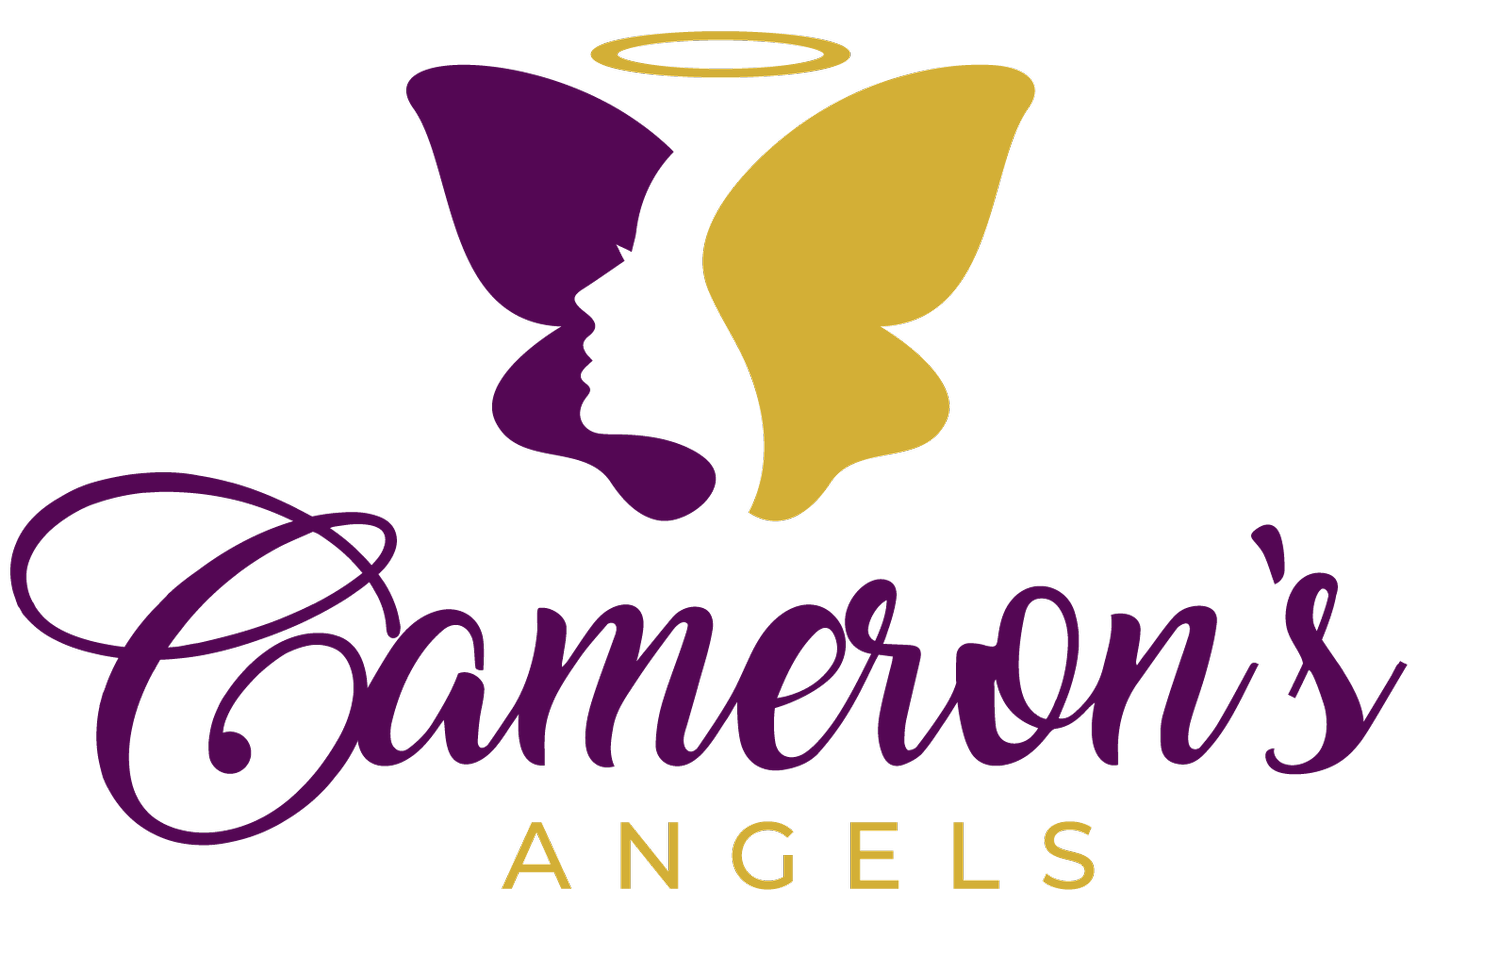 Camerons Angels logo